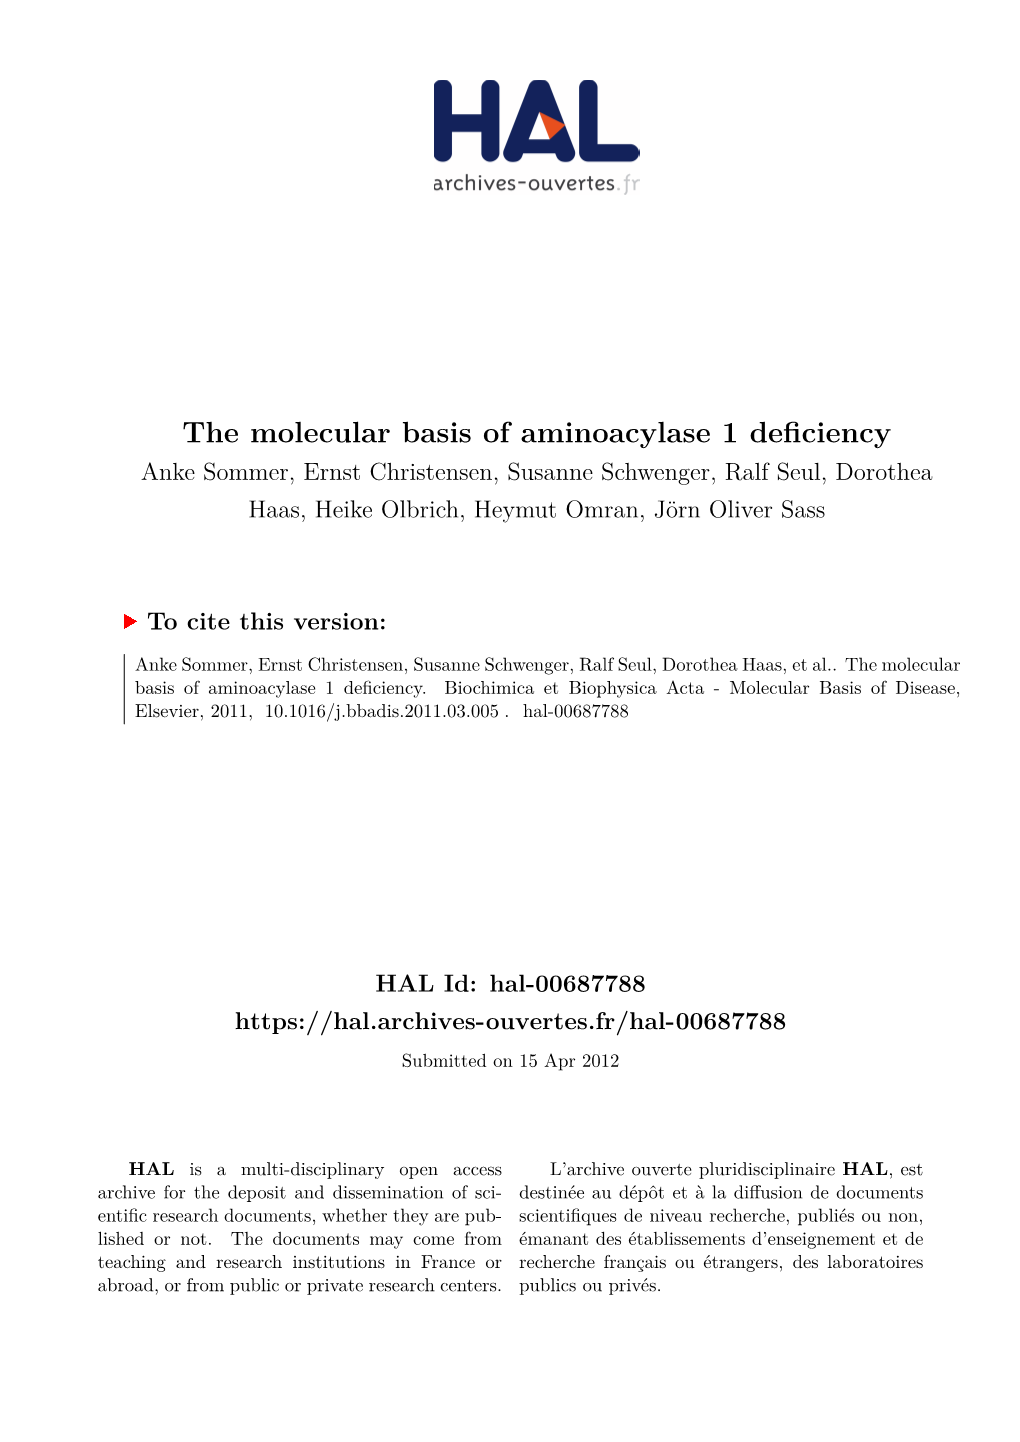 The Molecular Basis of Aminoacylase 1 Deficiency